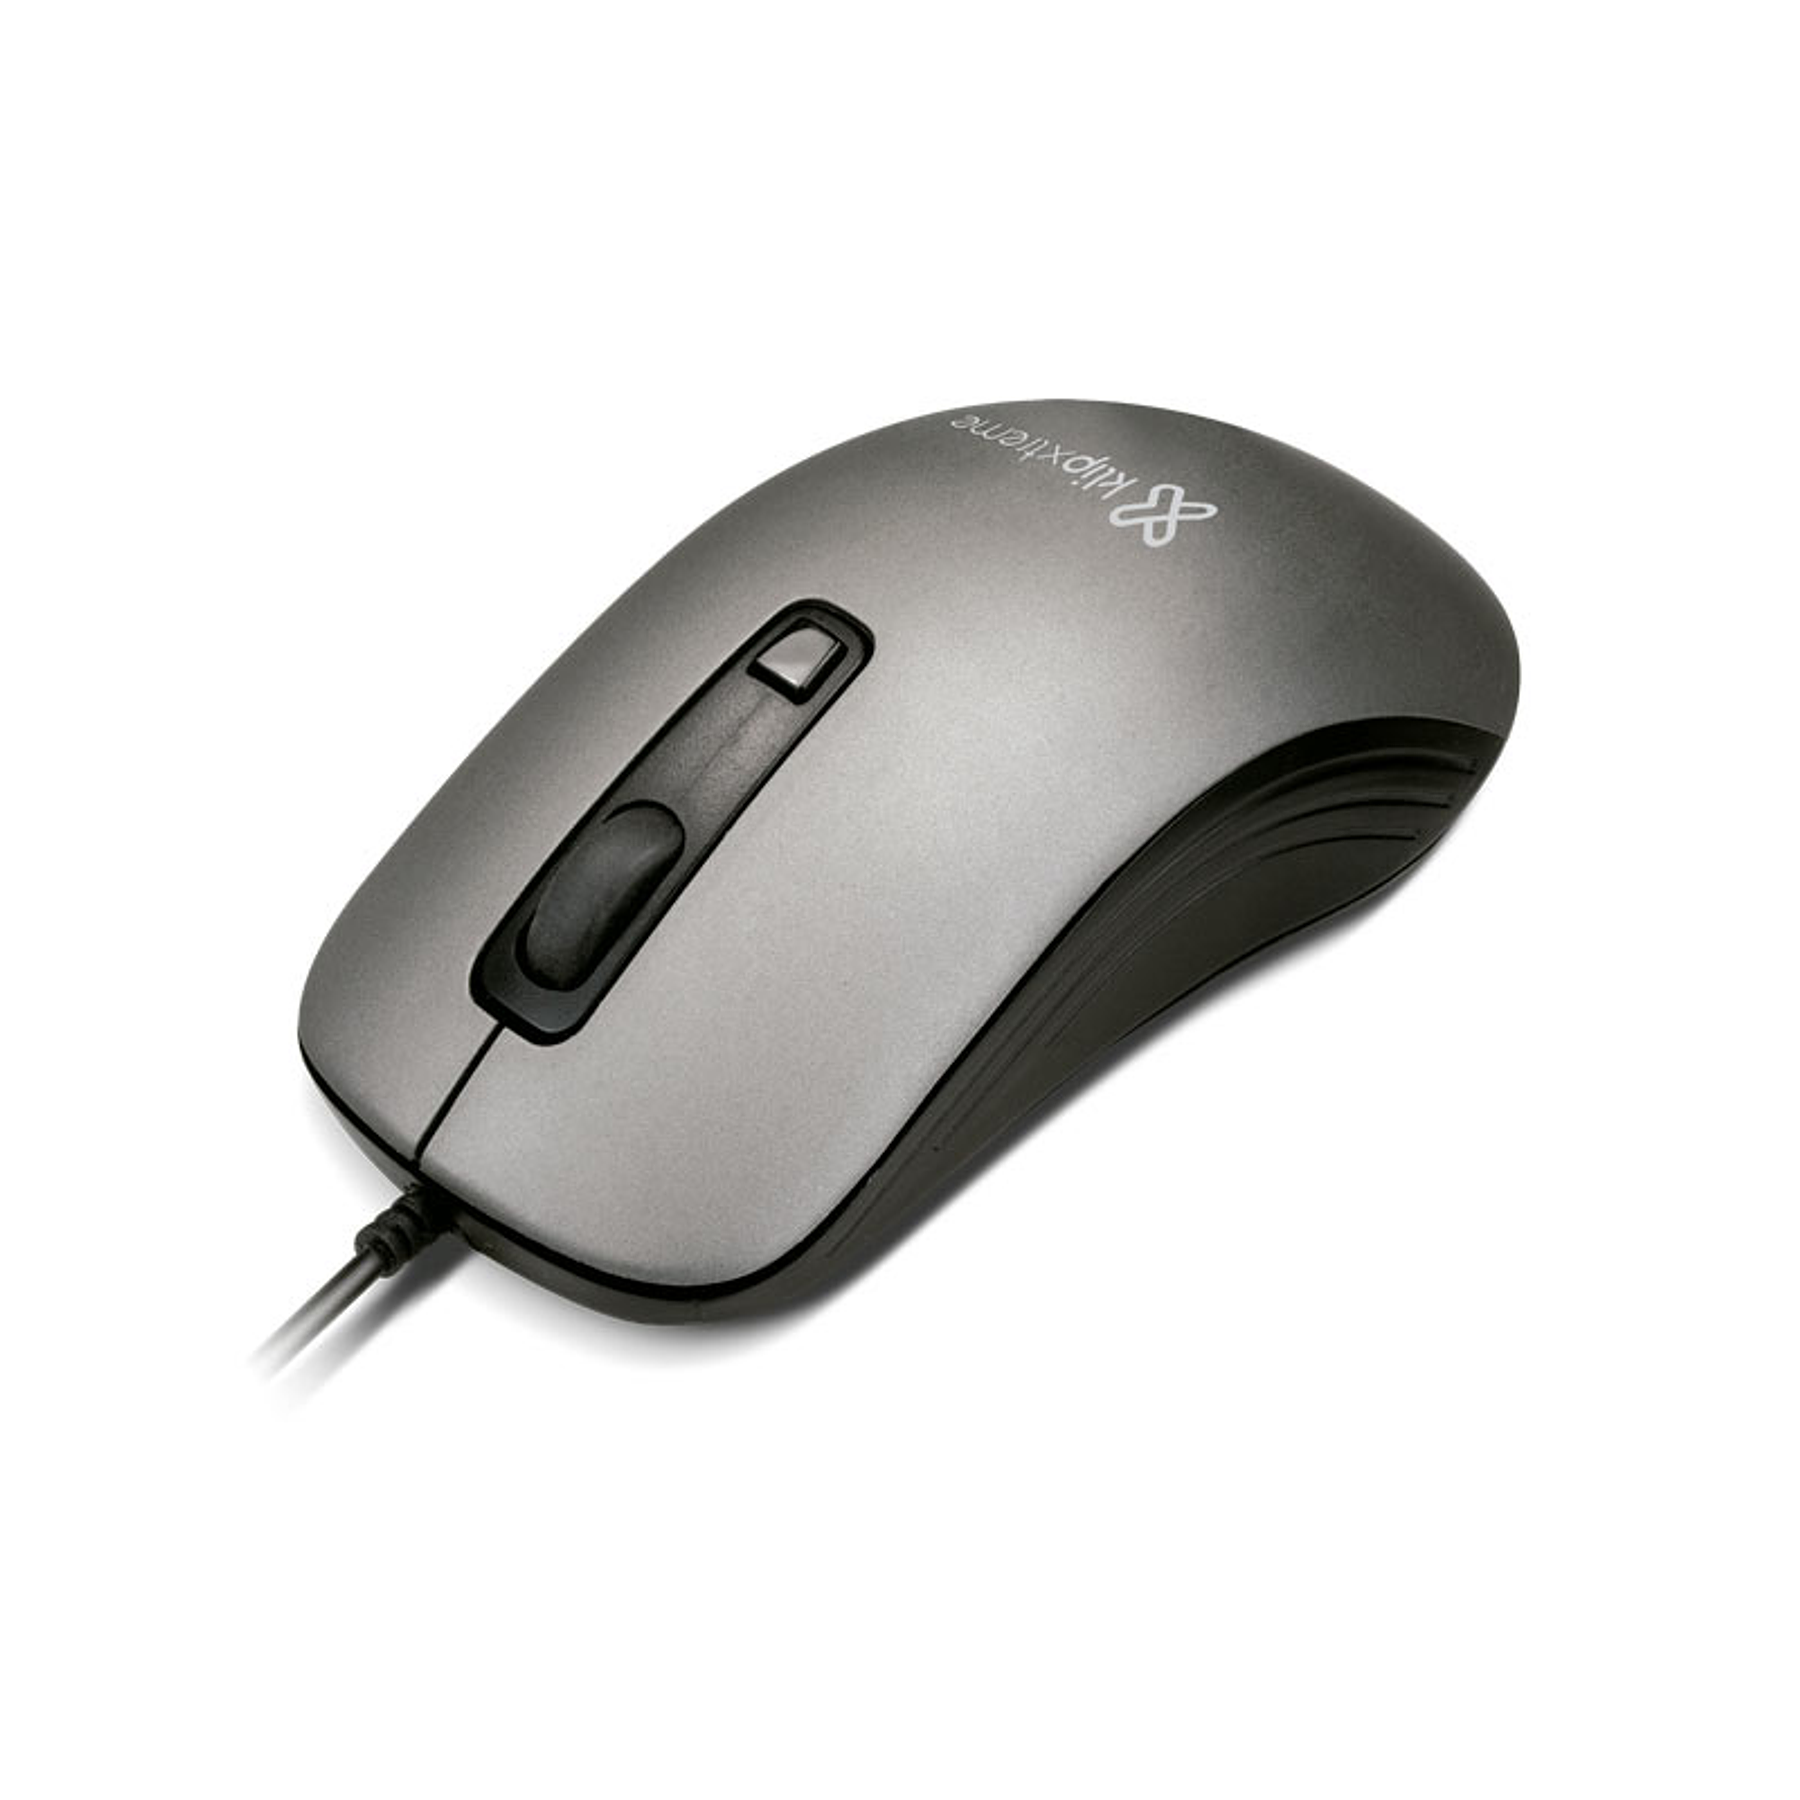 Klip Xtrem Mouse USB 1000/1600 DPI- Ambidiestro